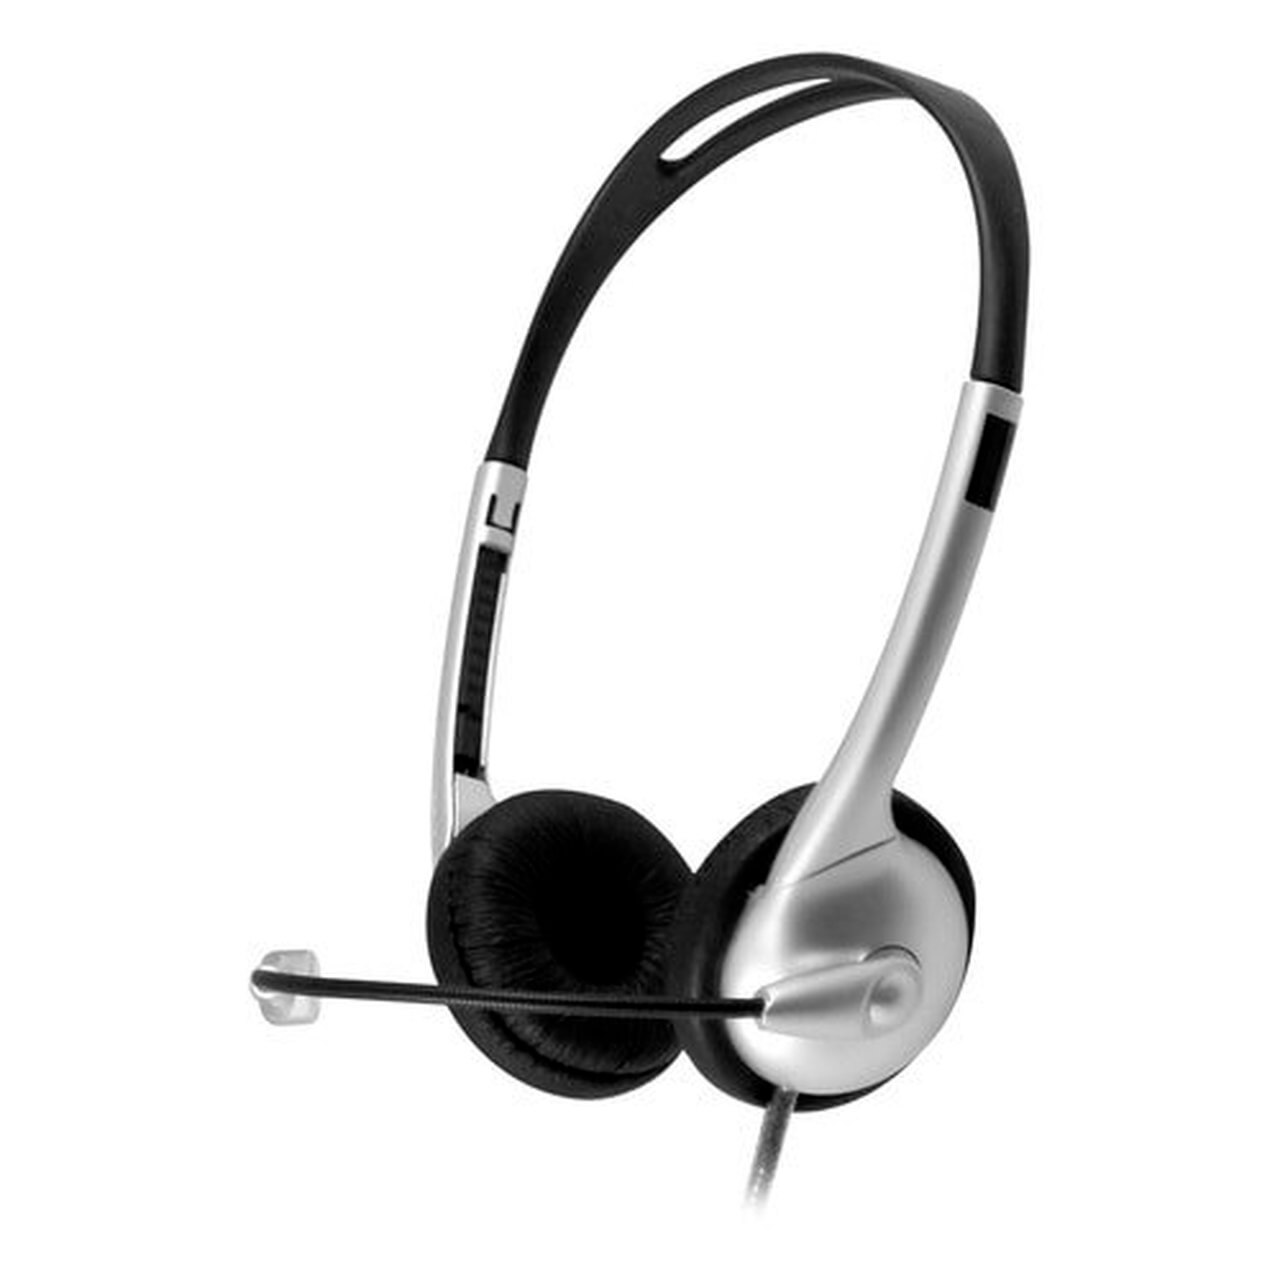 MACH-1 Multimedia USB Type-C Headset - Steel Reinforced Gooseneck Mic and In-Line Volume - Learning Headphones